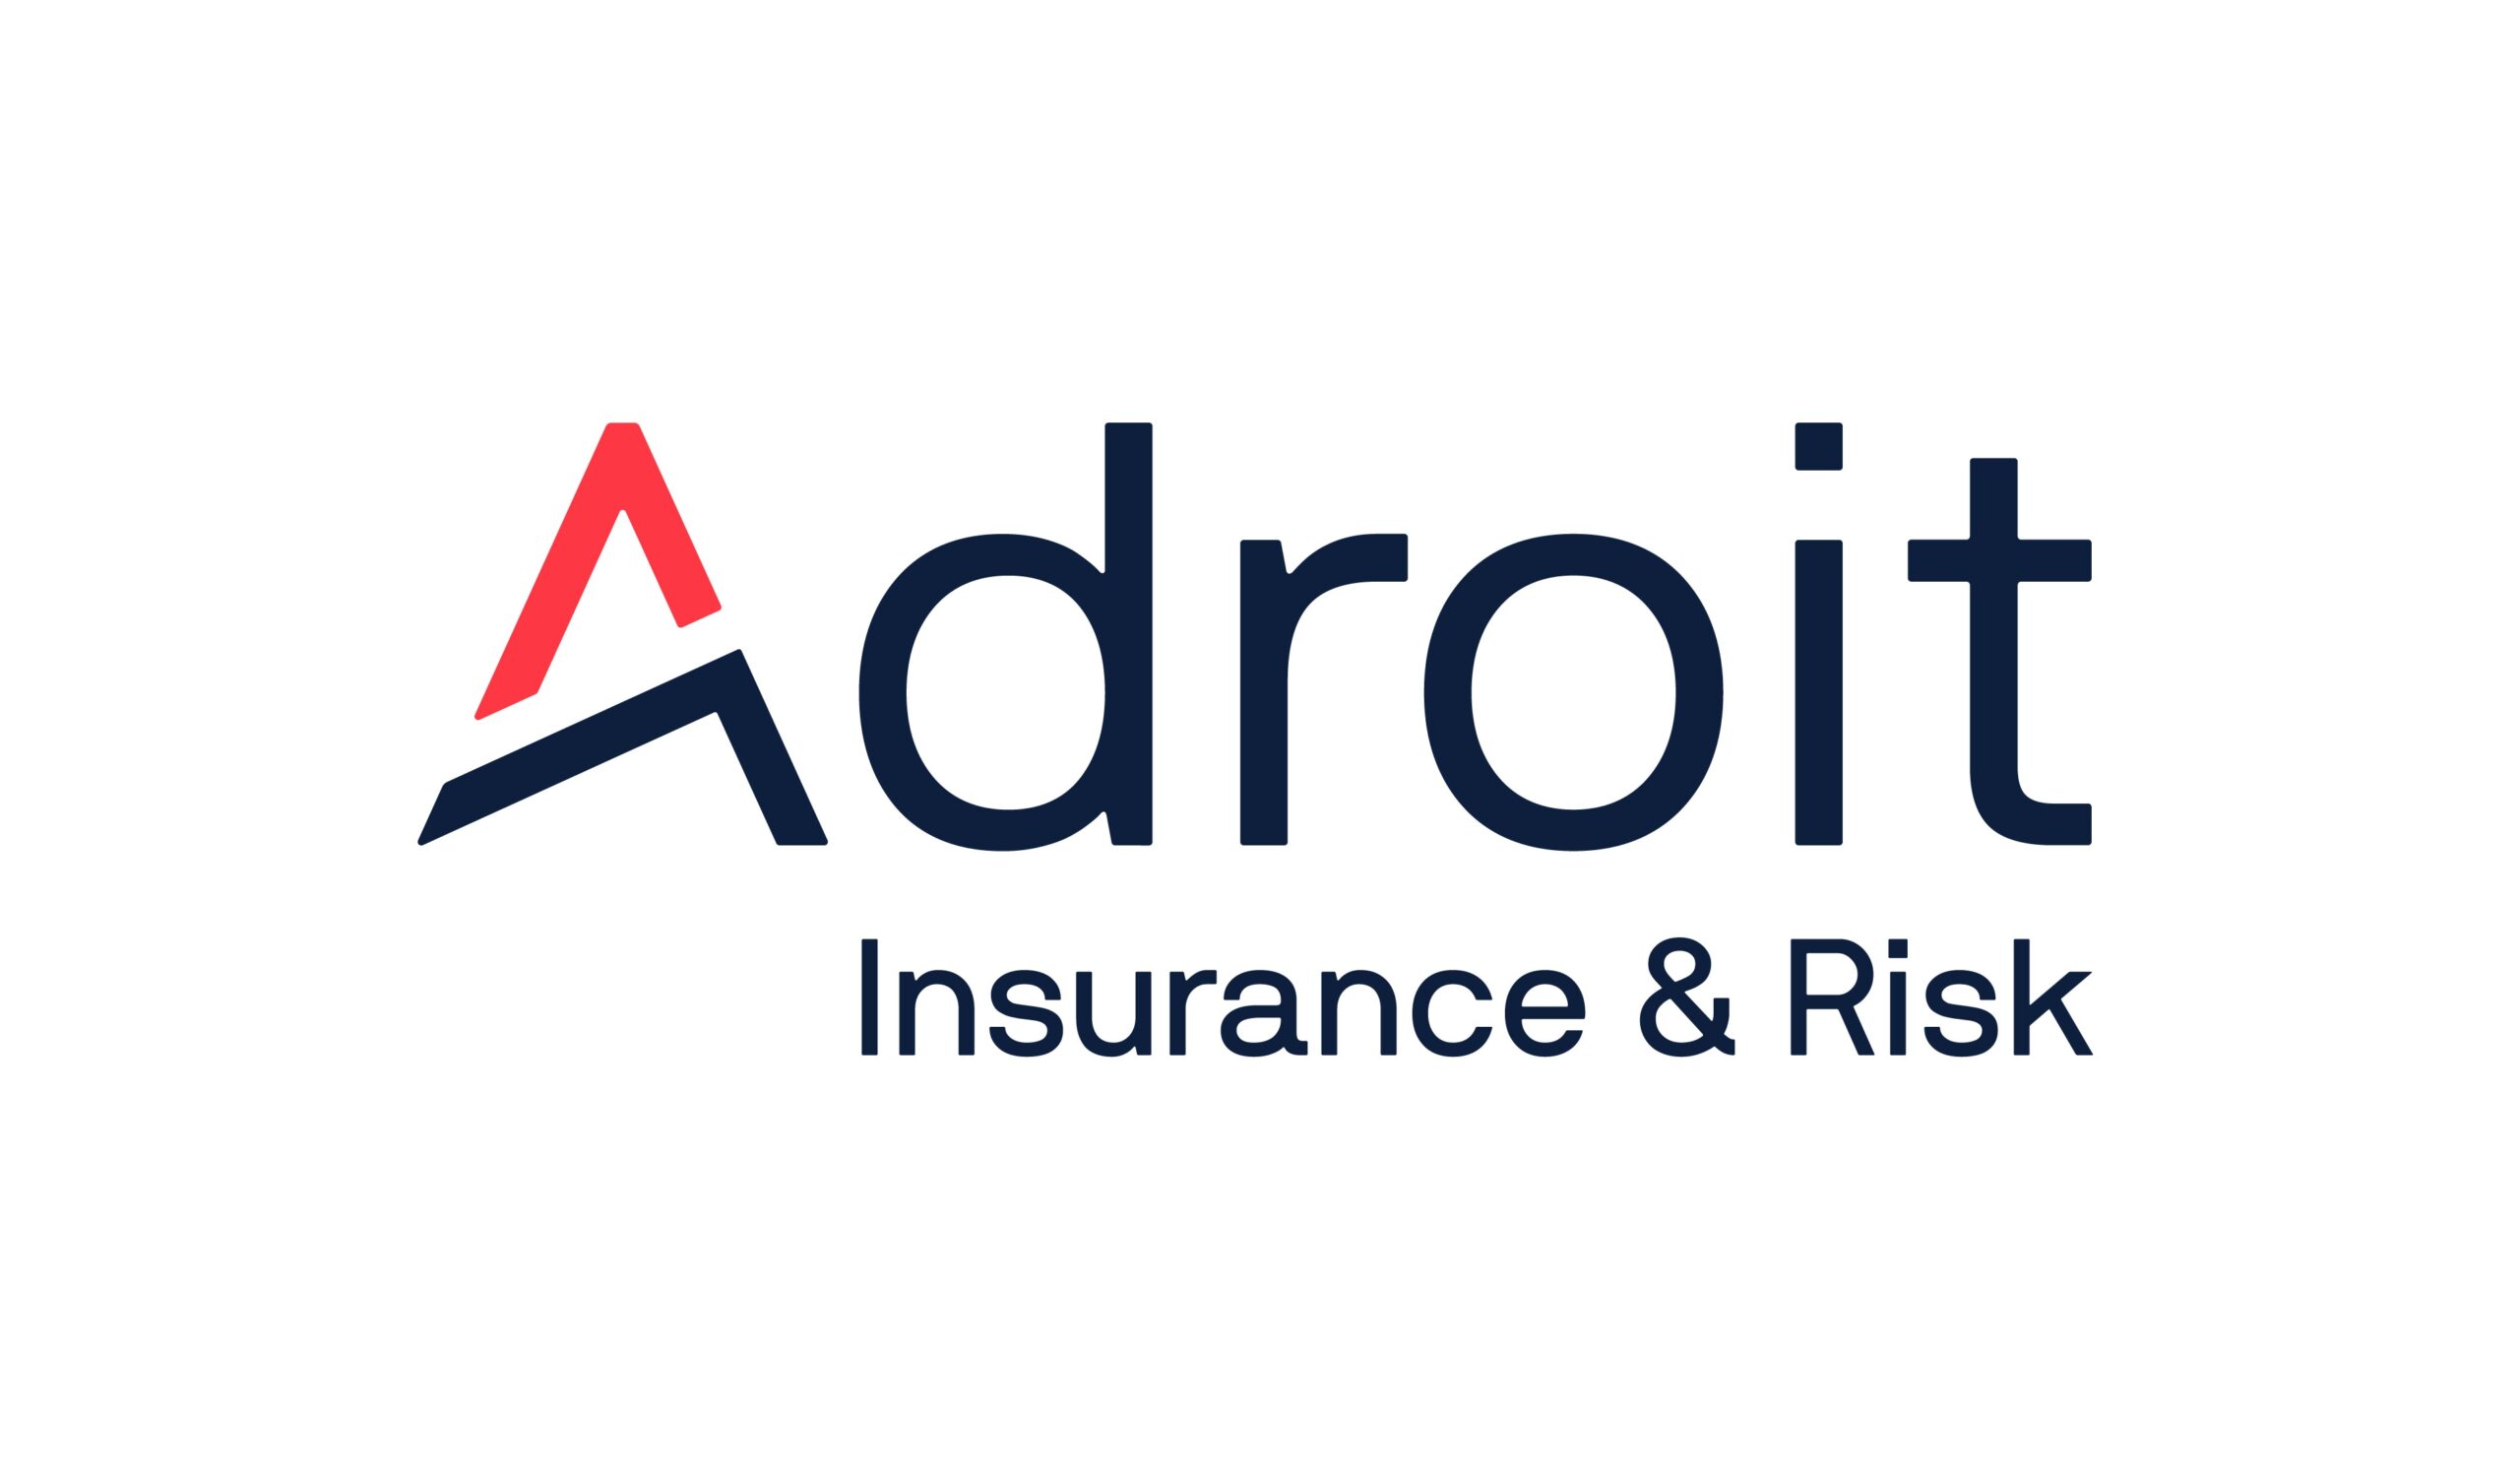 Adroit 'Insurance & Risk' business logo